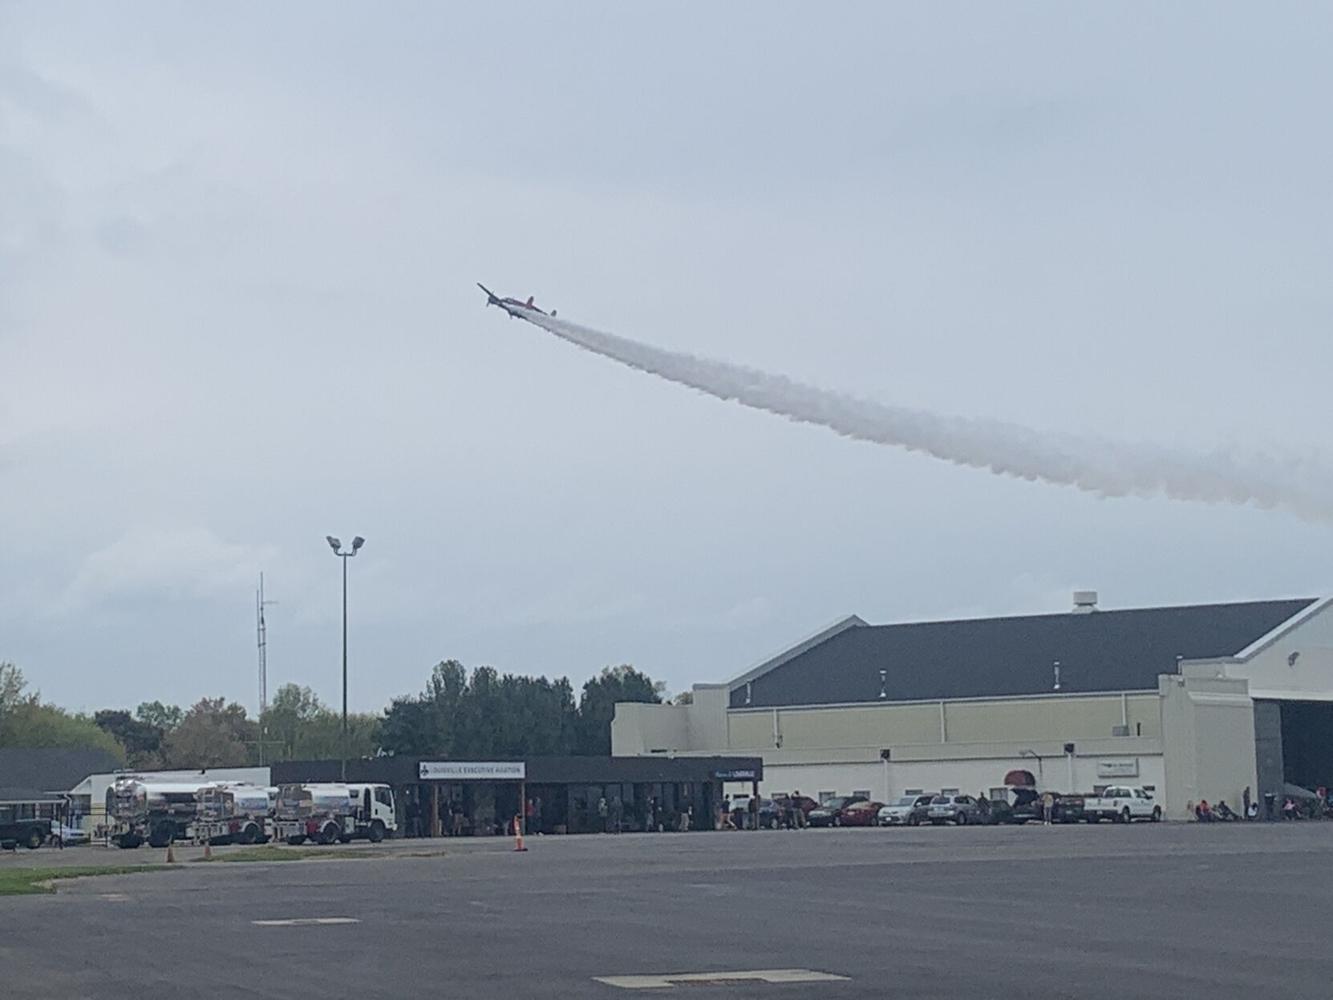 A plane flies over Bowman Field during Thunder Over Louisville air show